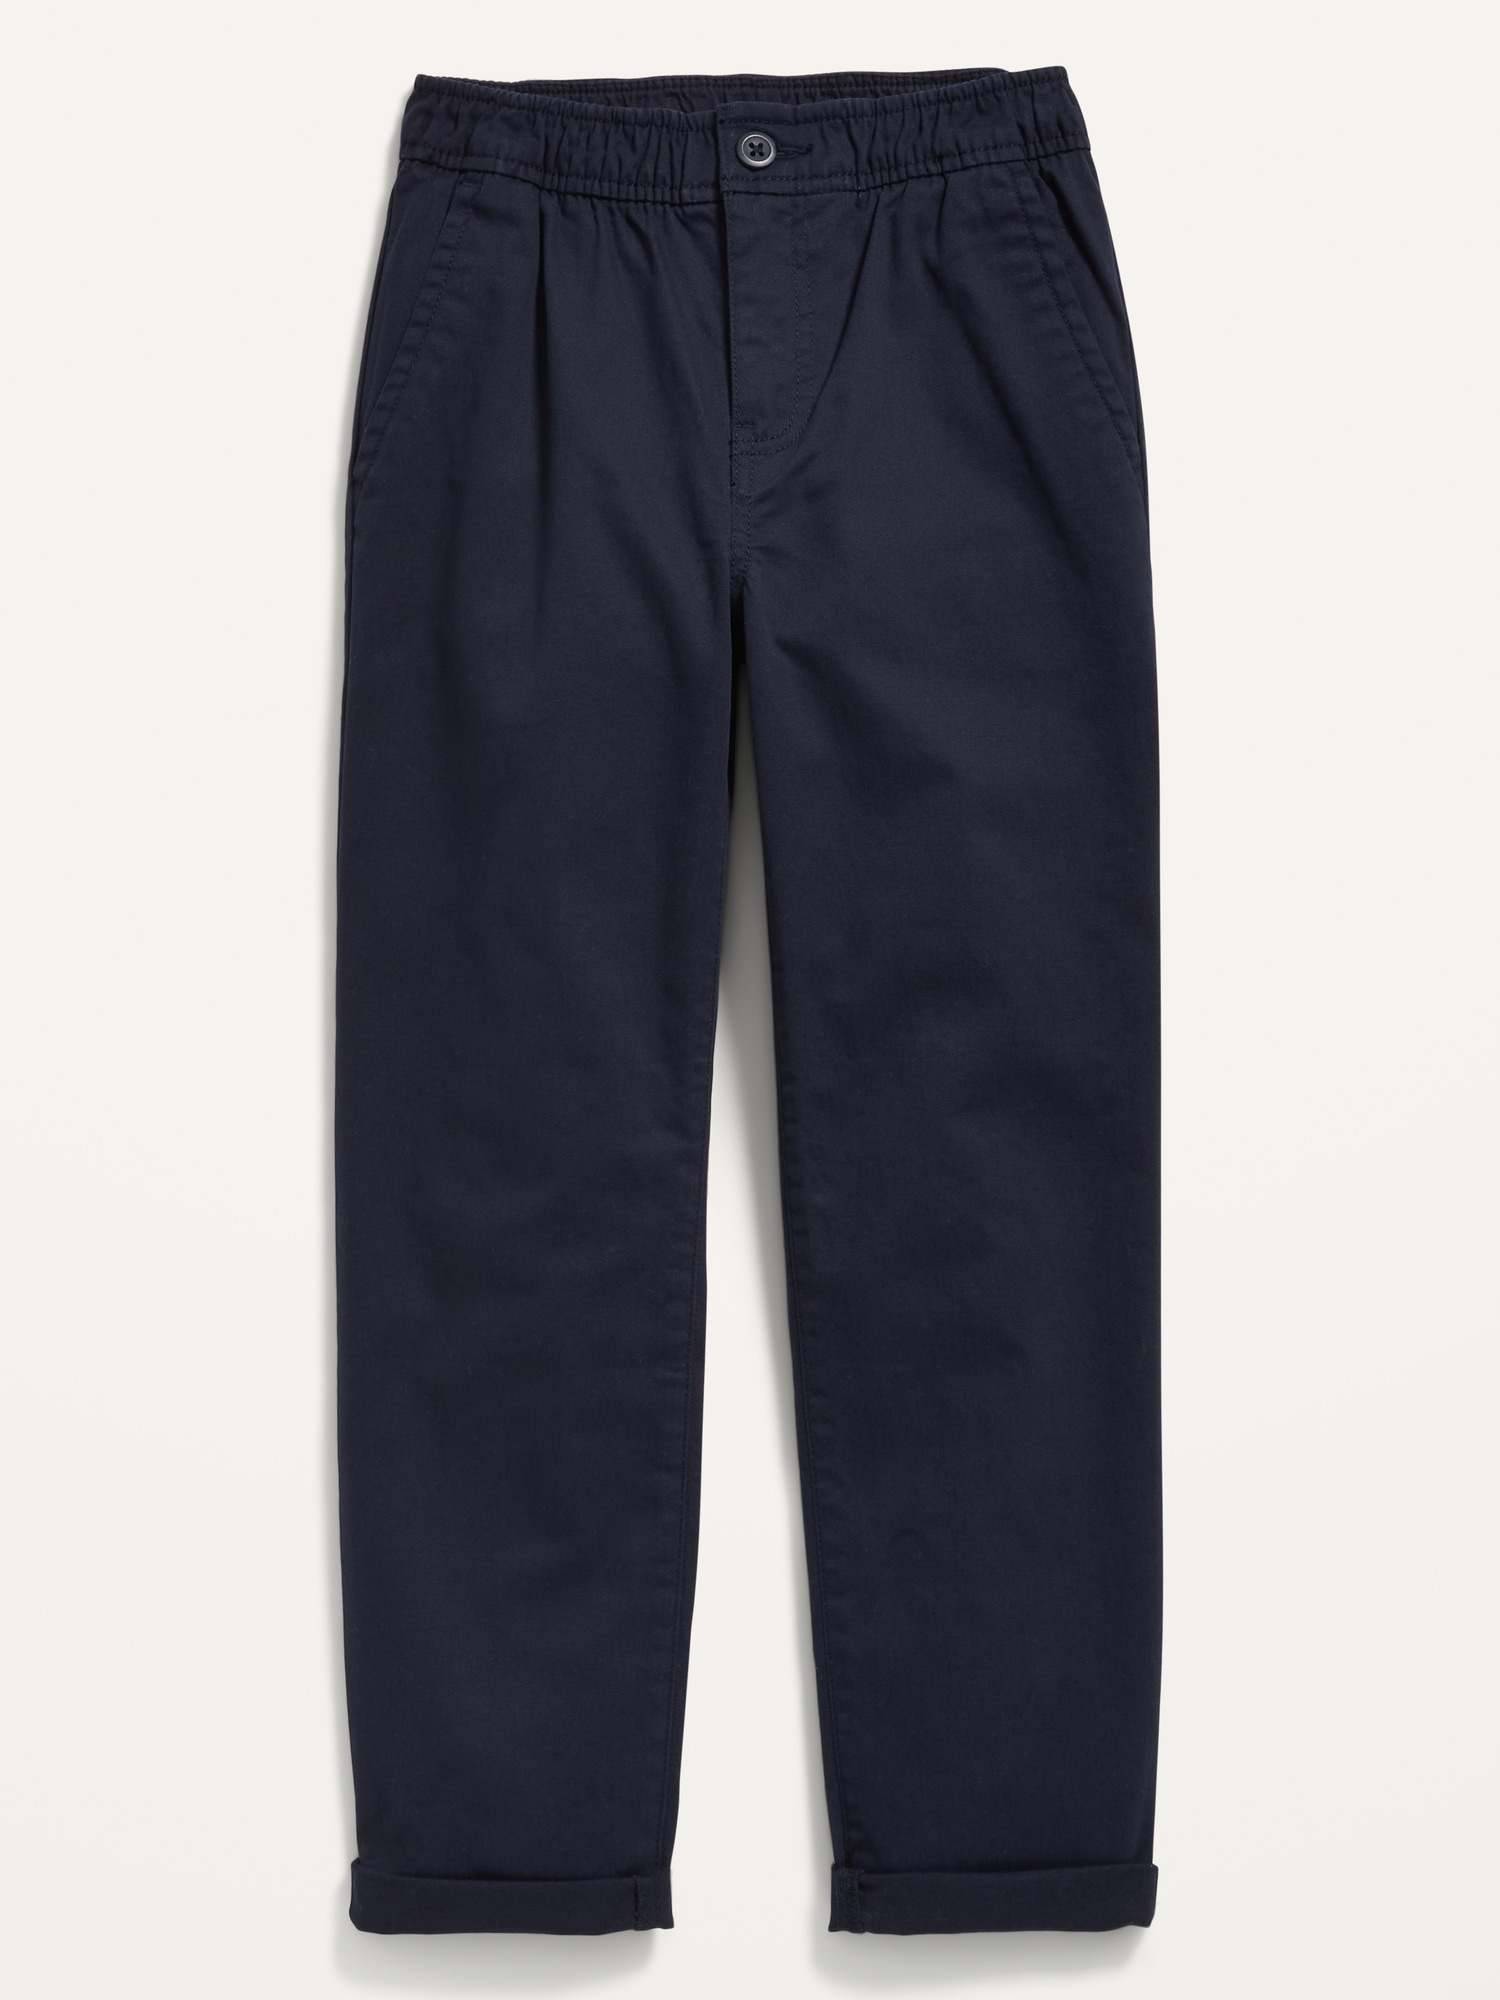 OGC Chino Built-In Flex Taper Pants for Boys | Old Navy